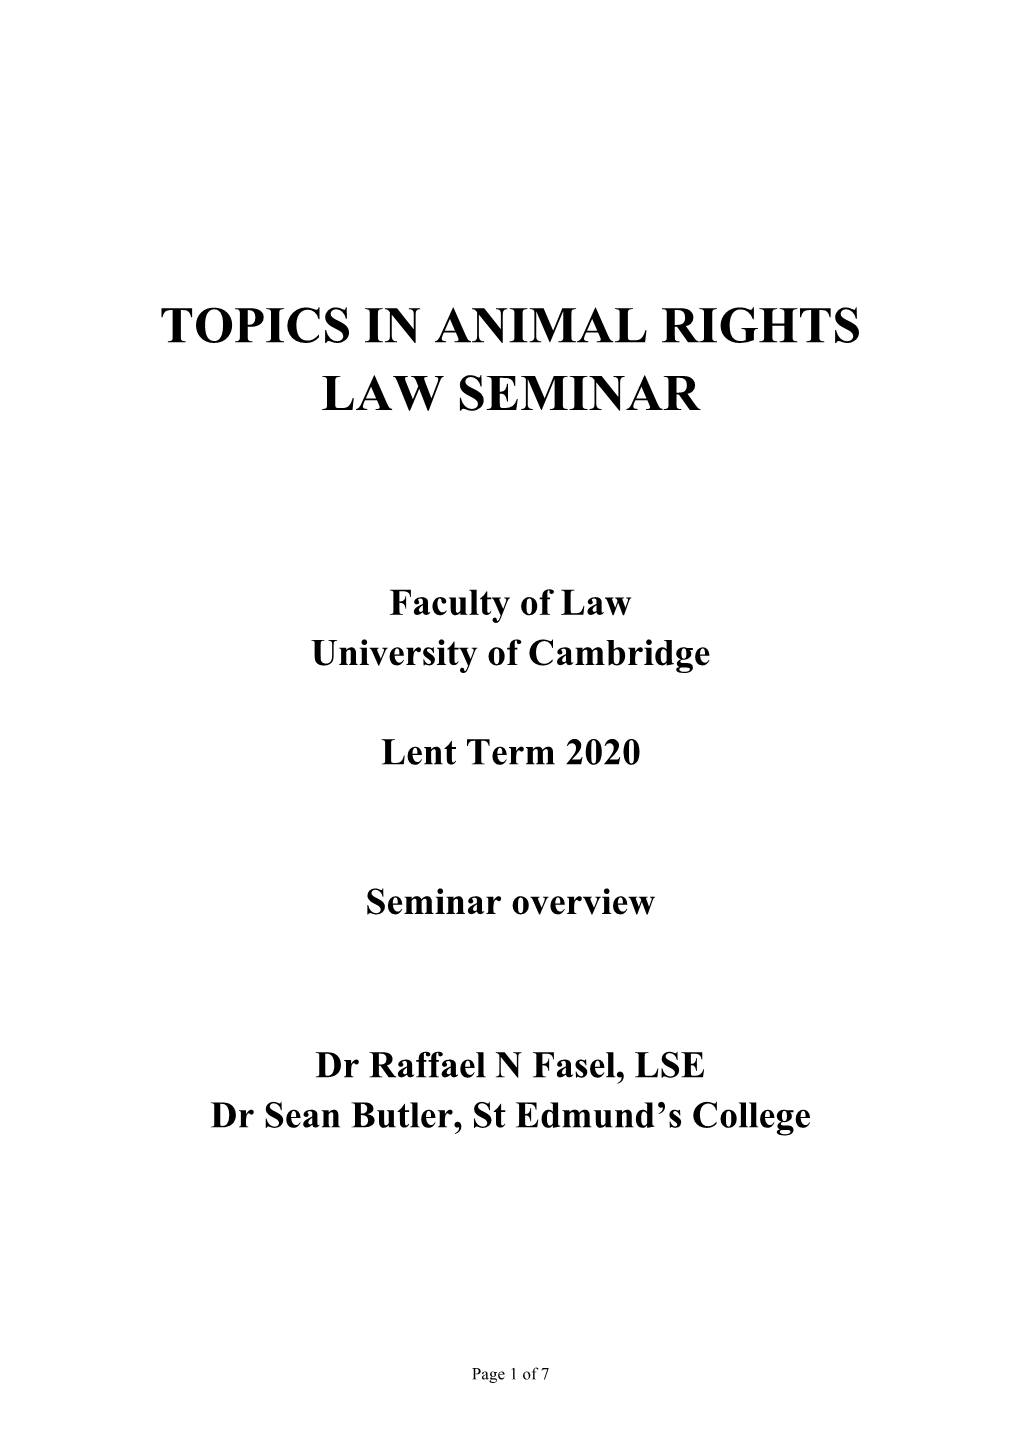 Topics in Animal Rights Law Seminar